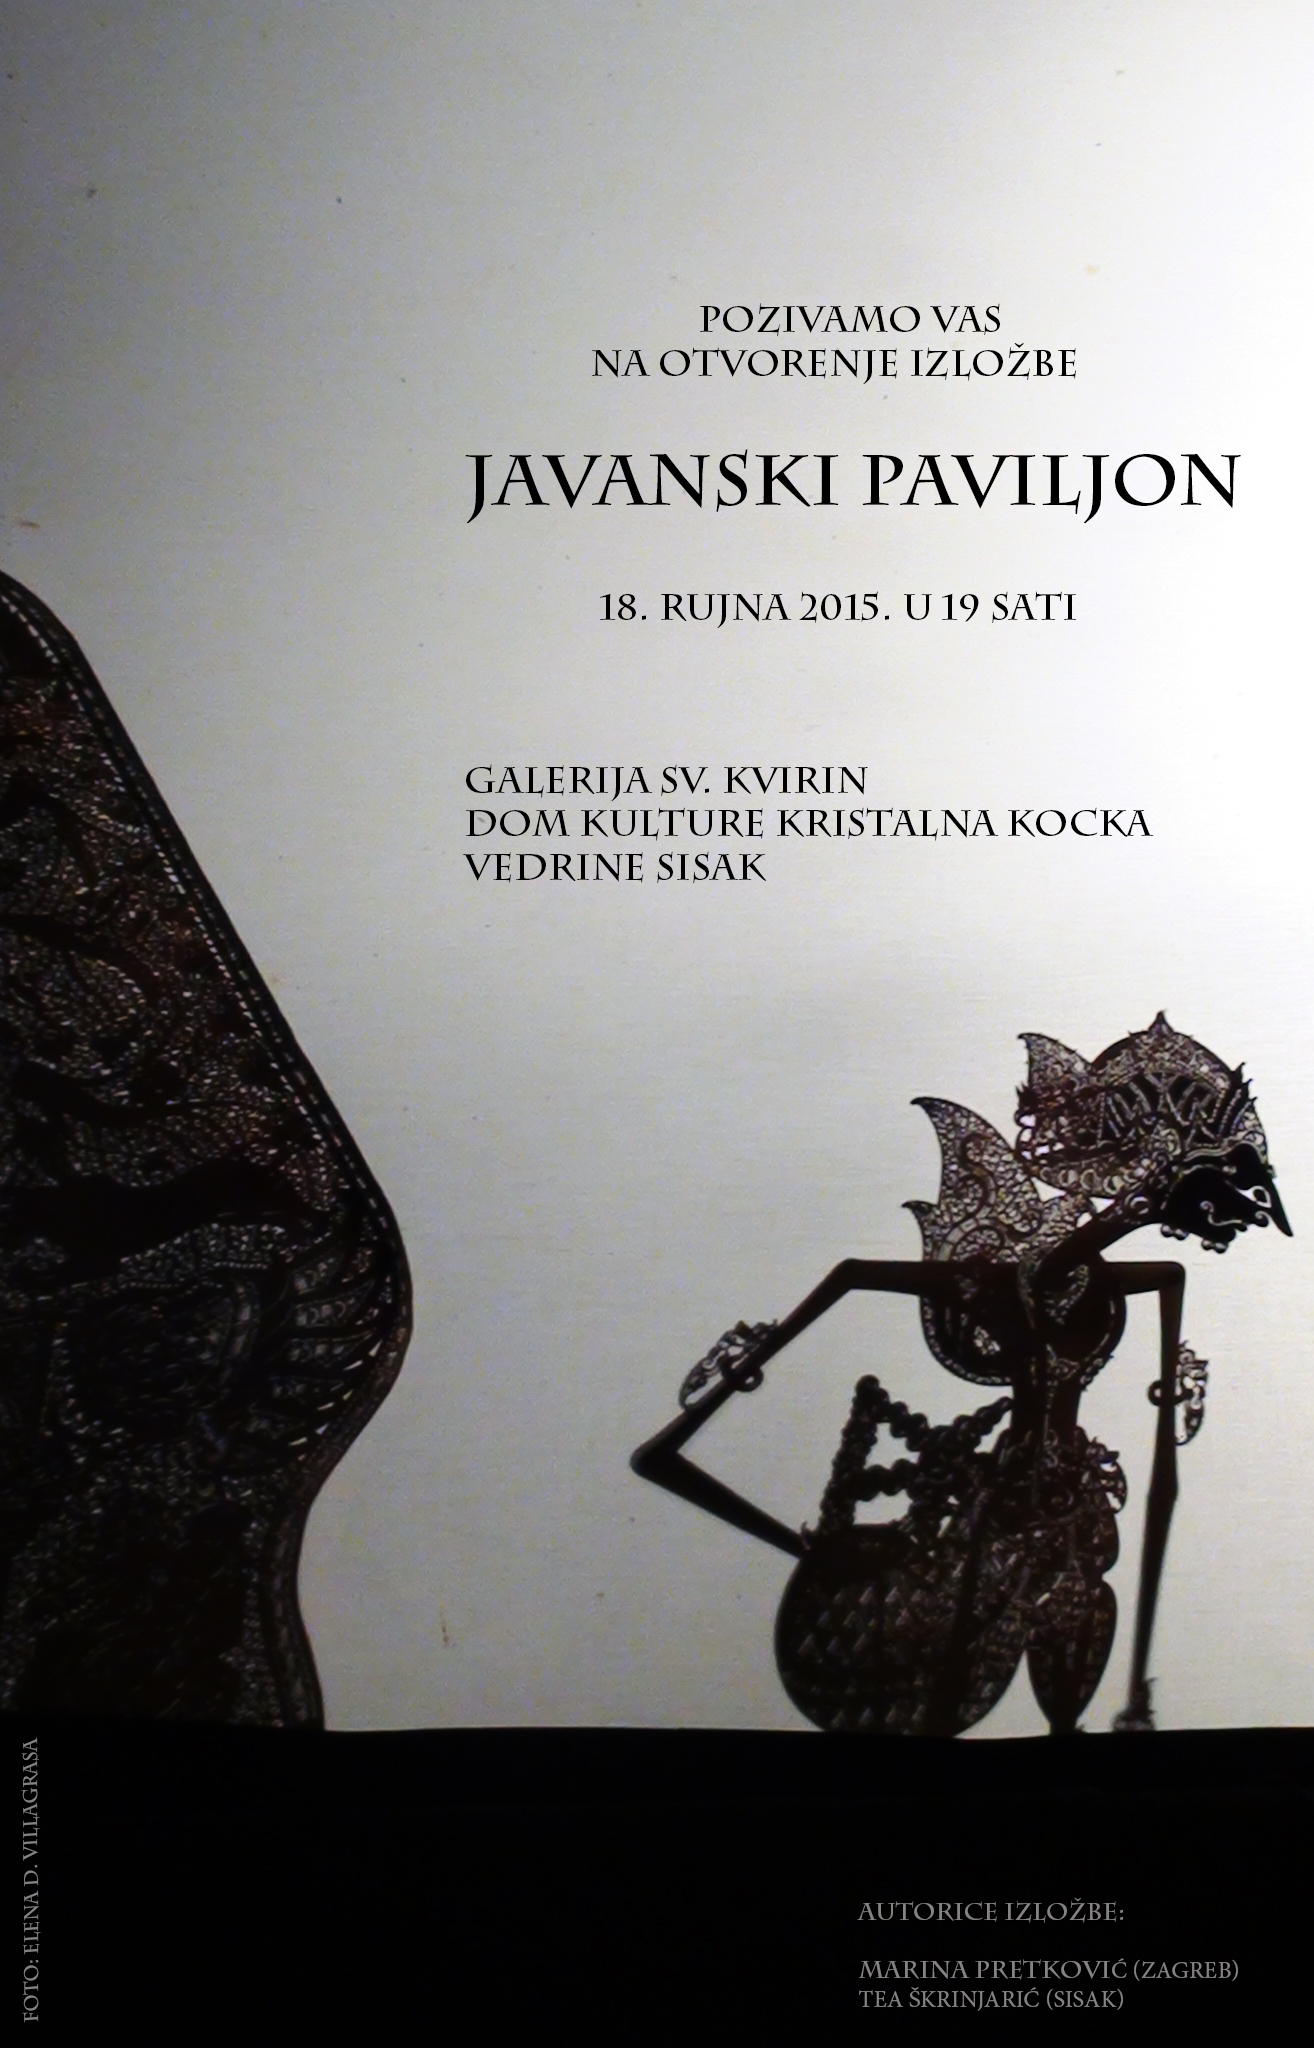 You are currently viewing Izložba “Javanski paviljon” u Galeriji sv. Kvirin